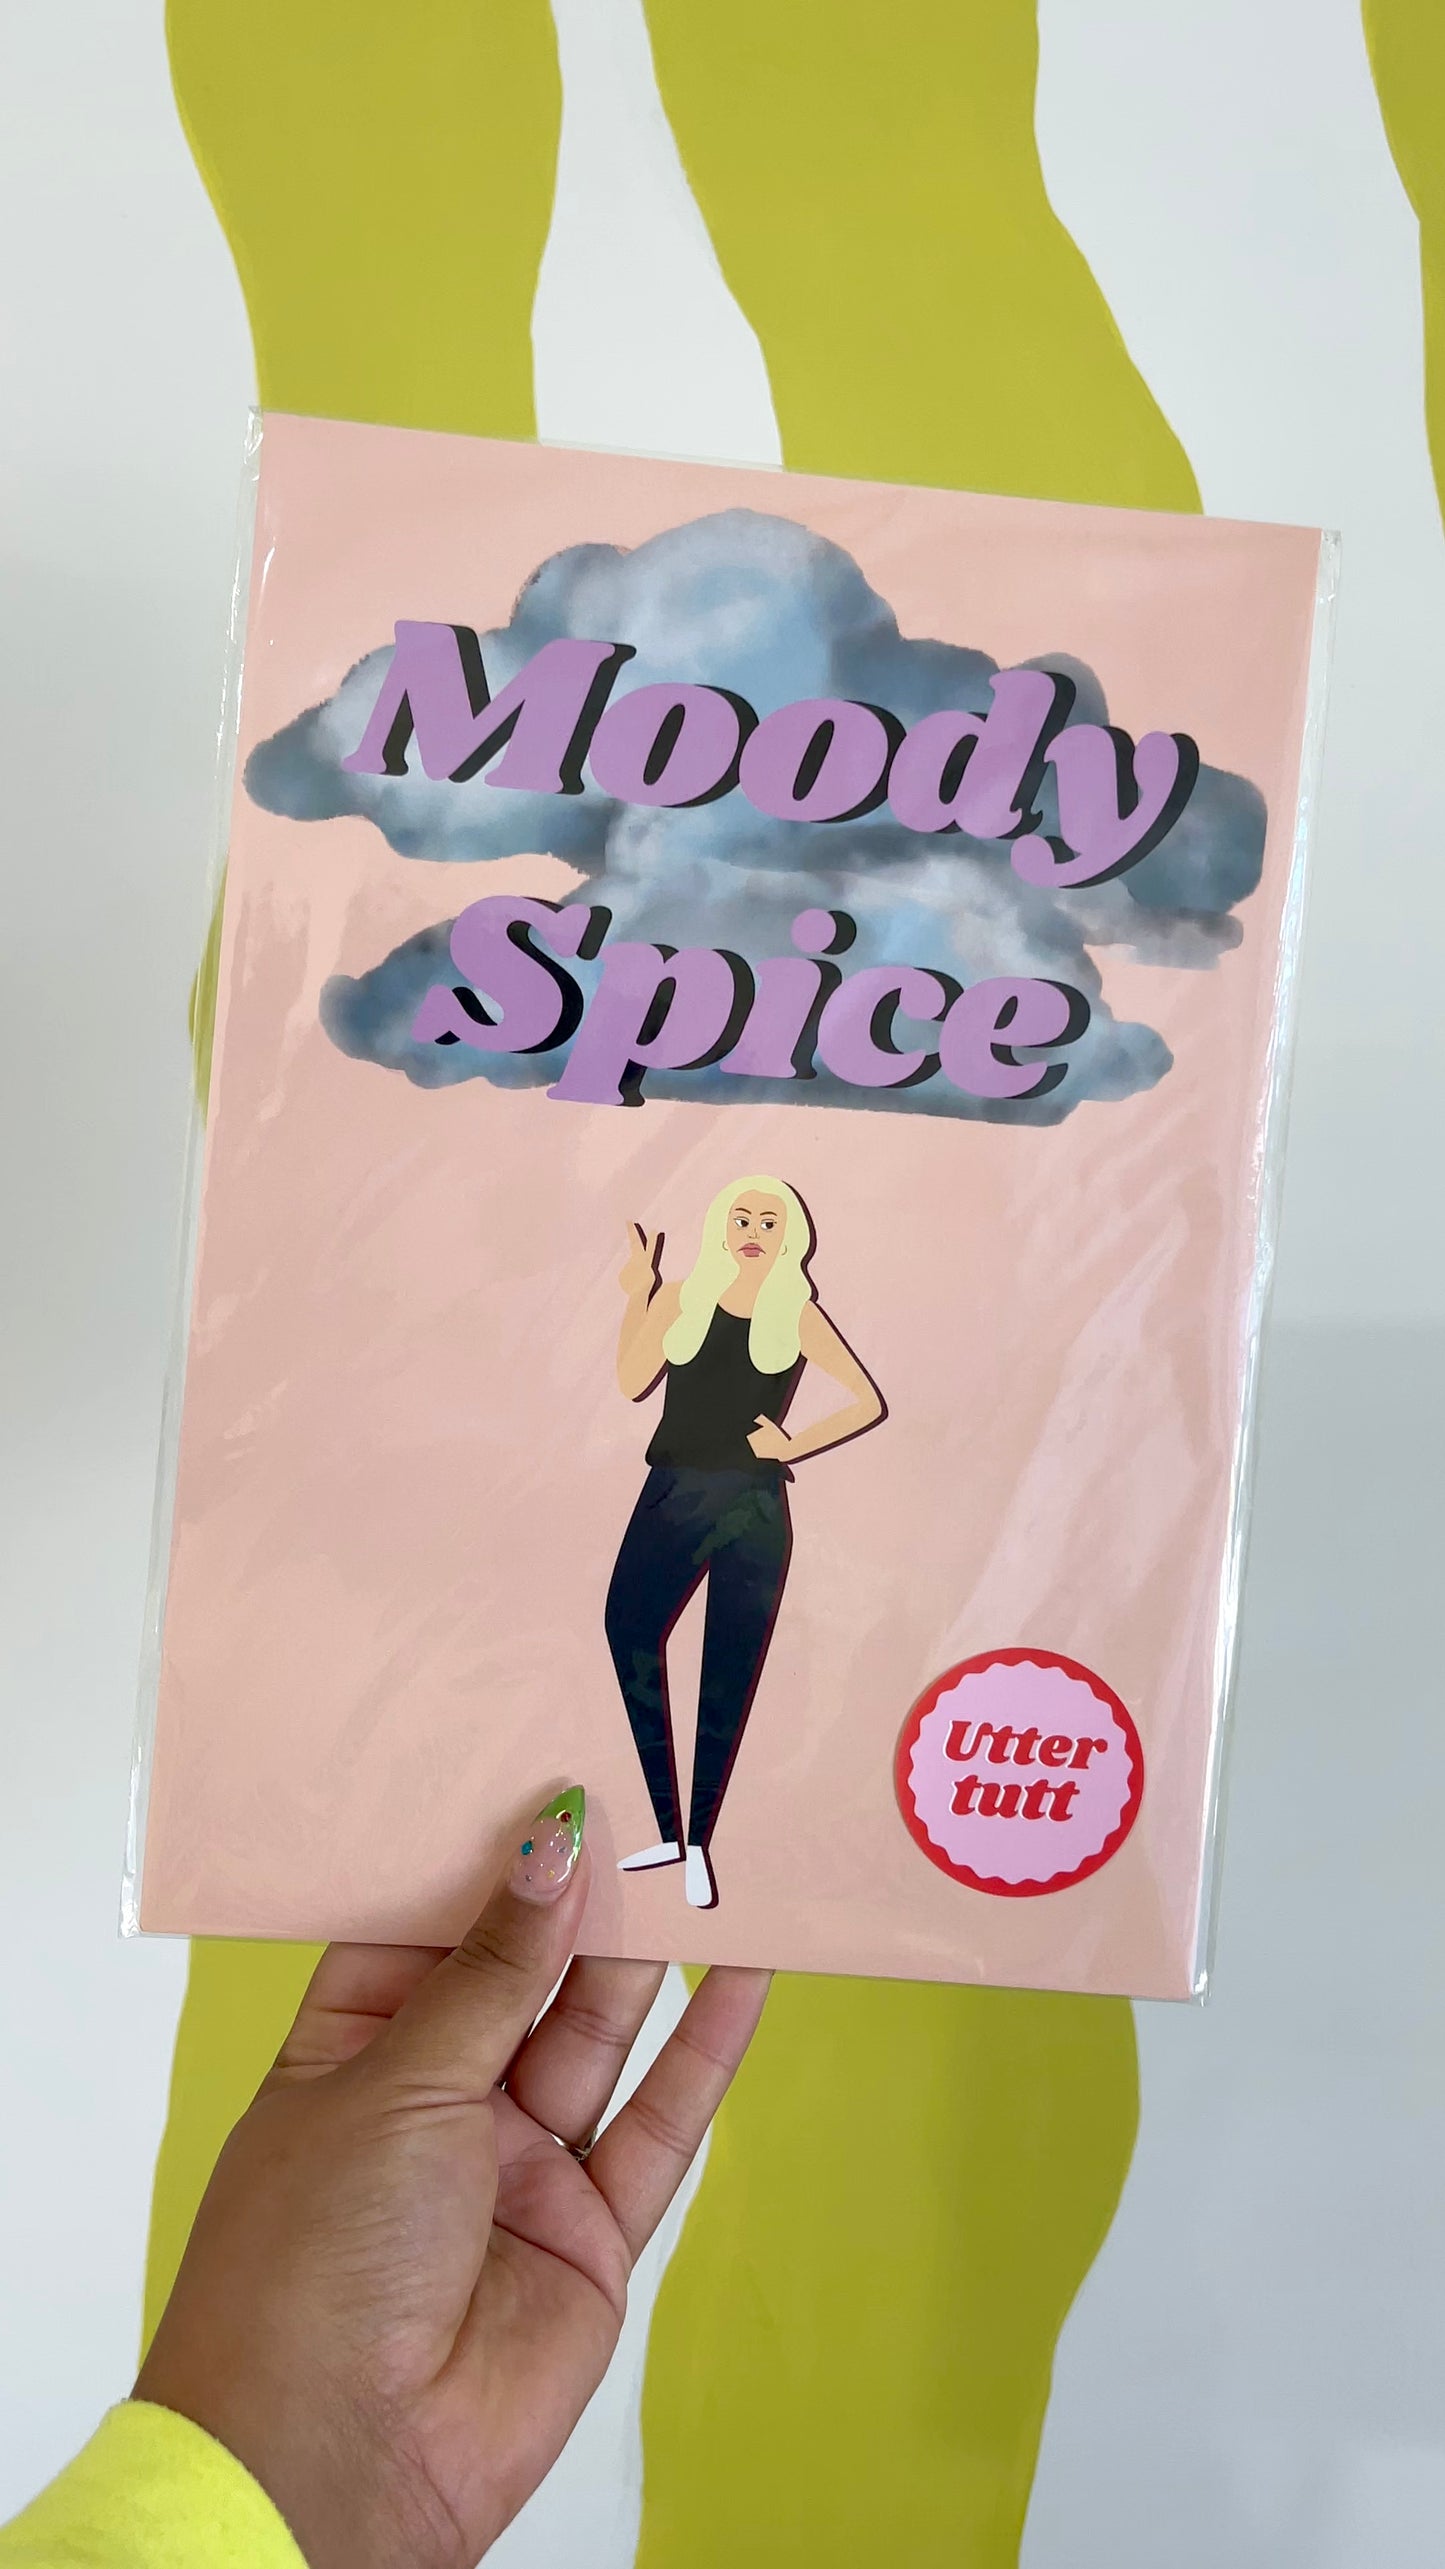 Moody Spice - Blonde Queen